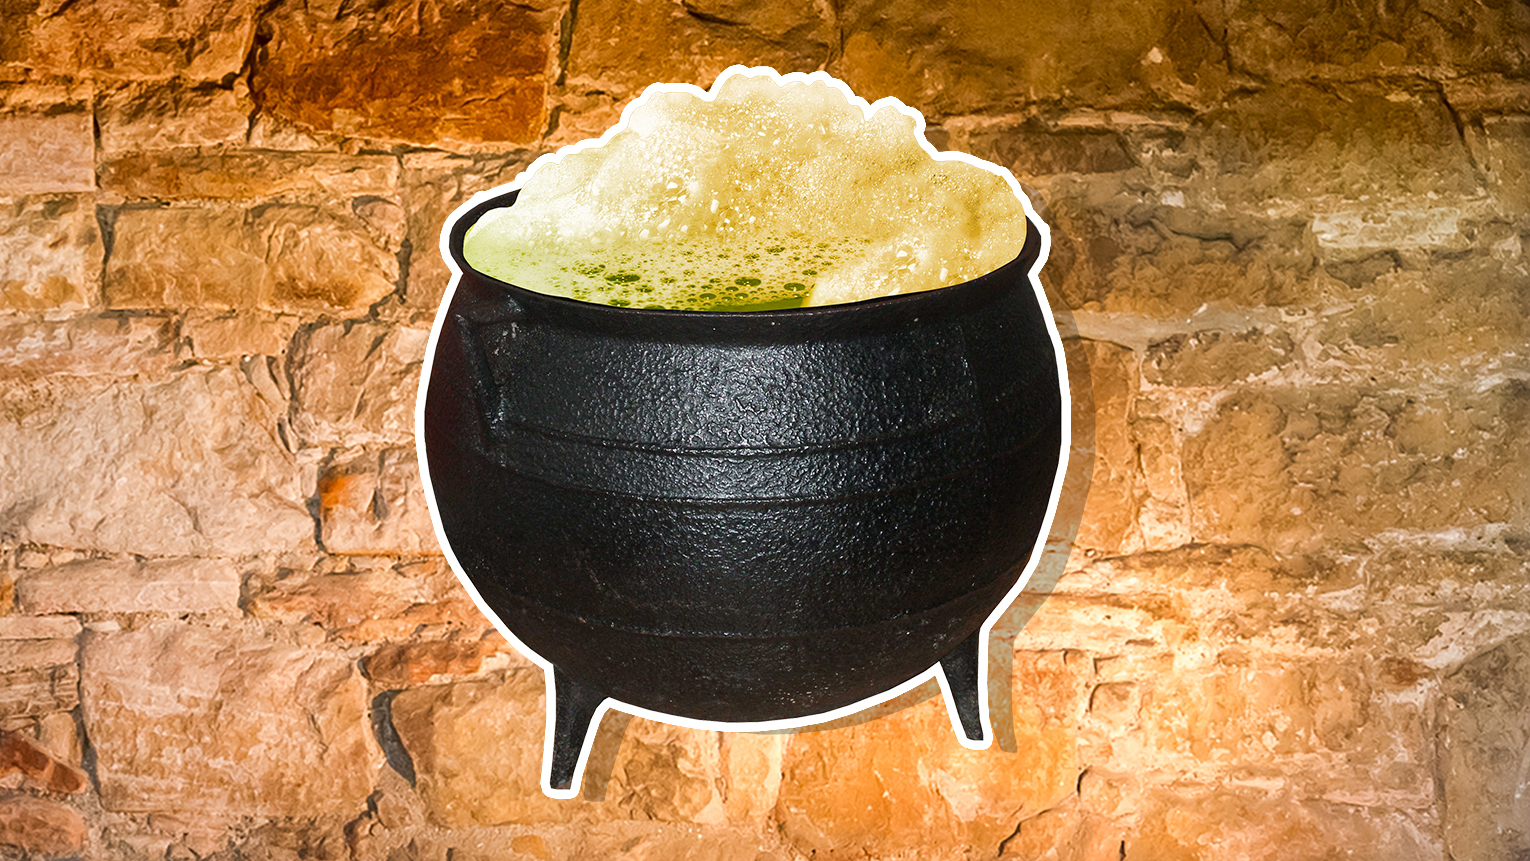 A bubbling cauldron